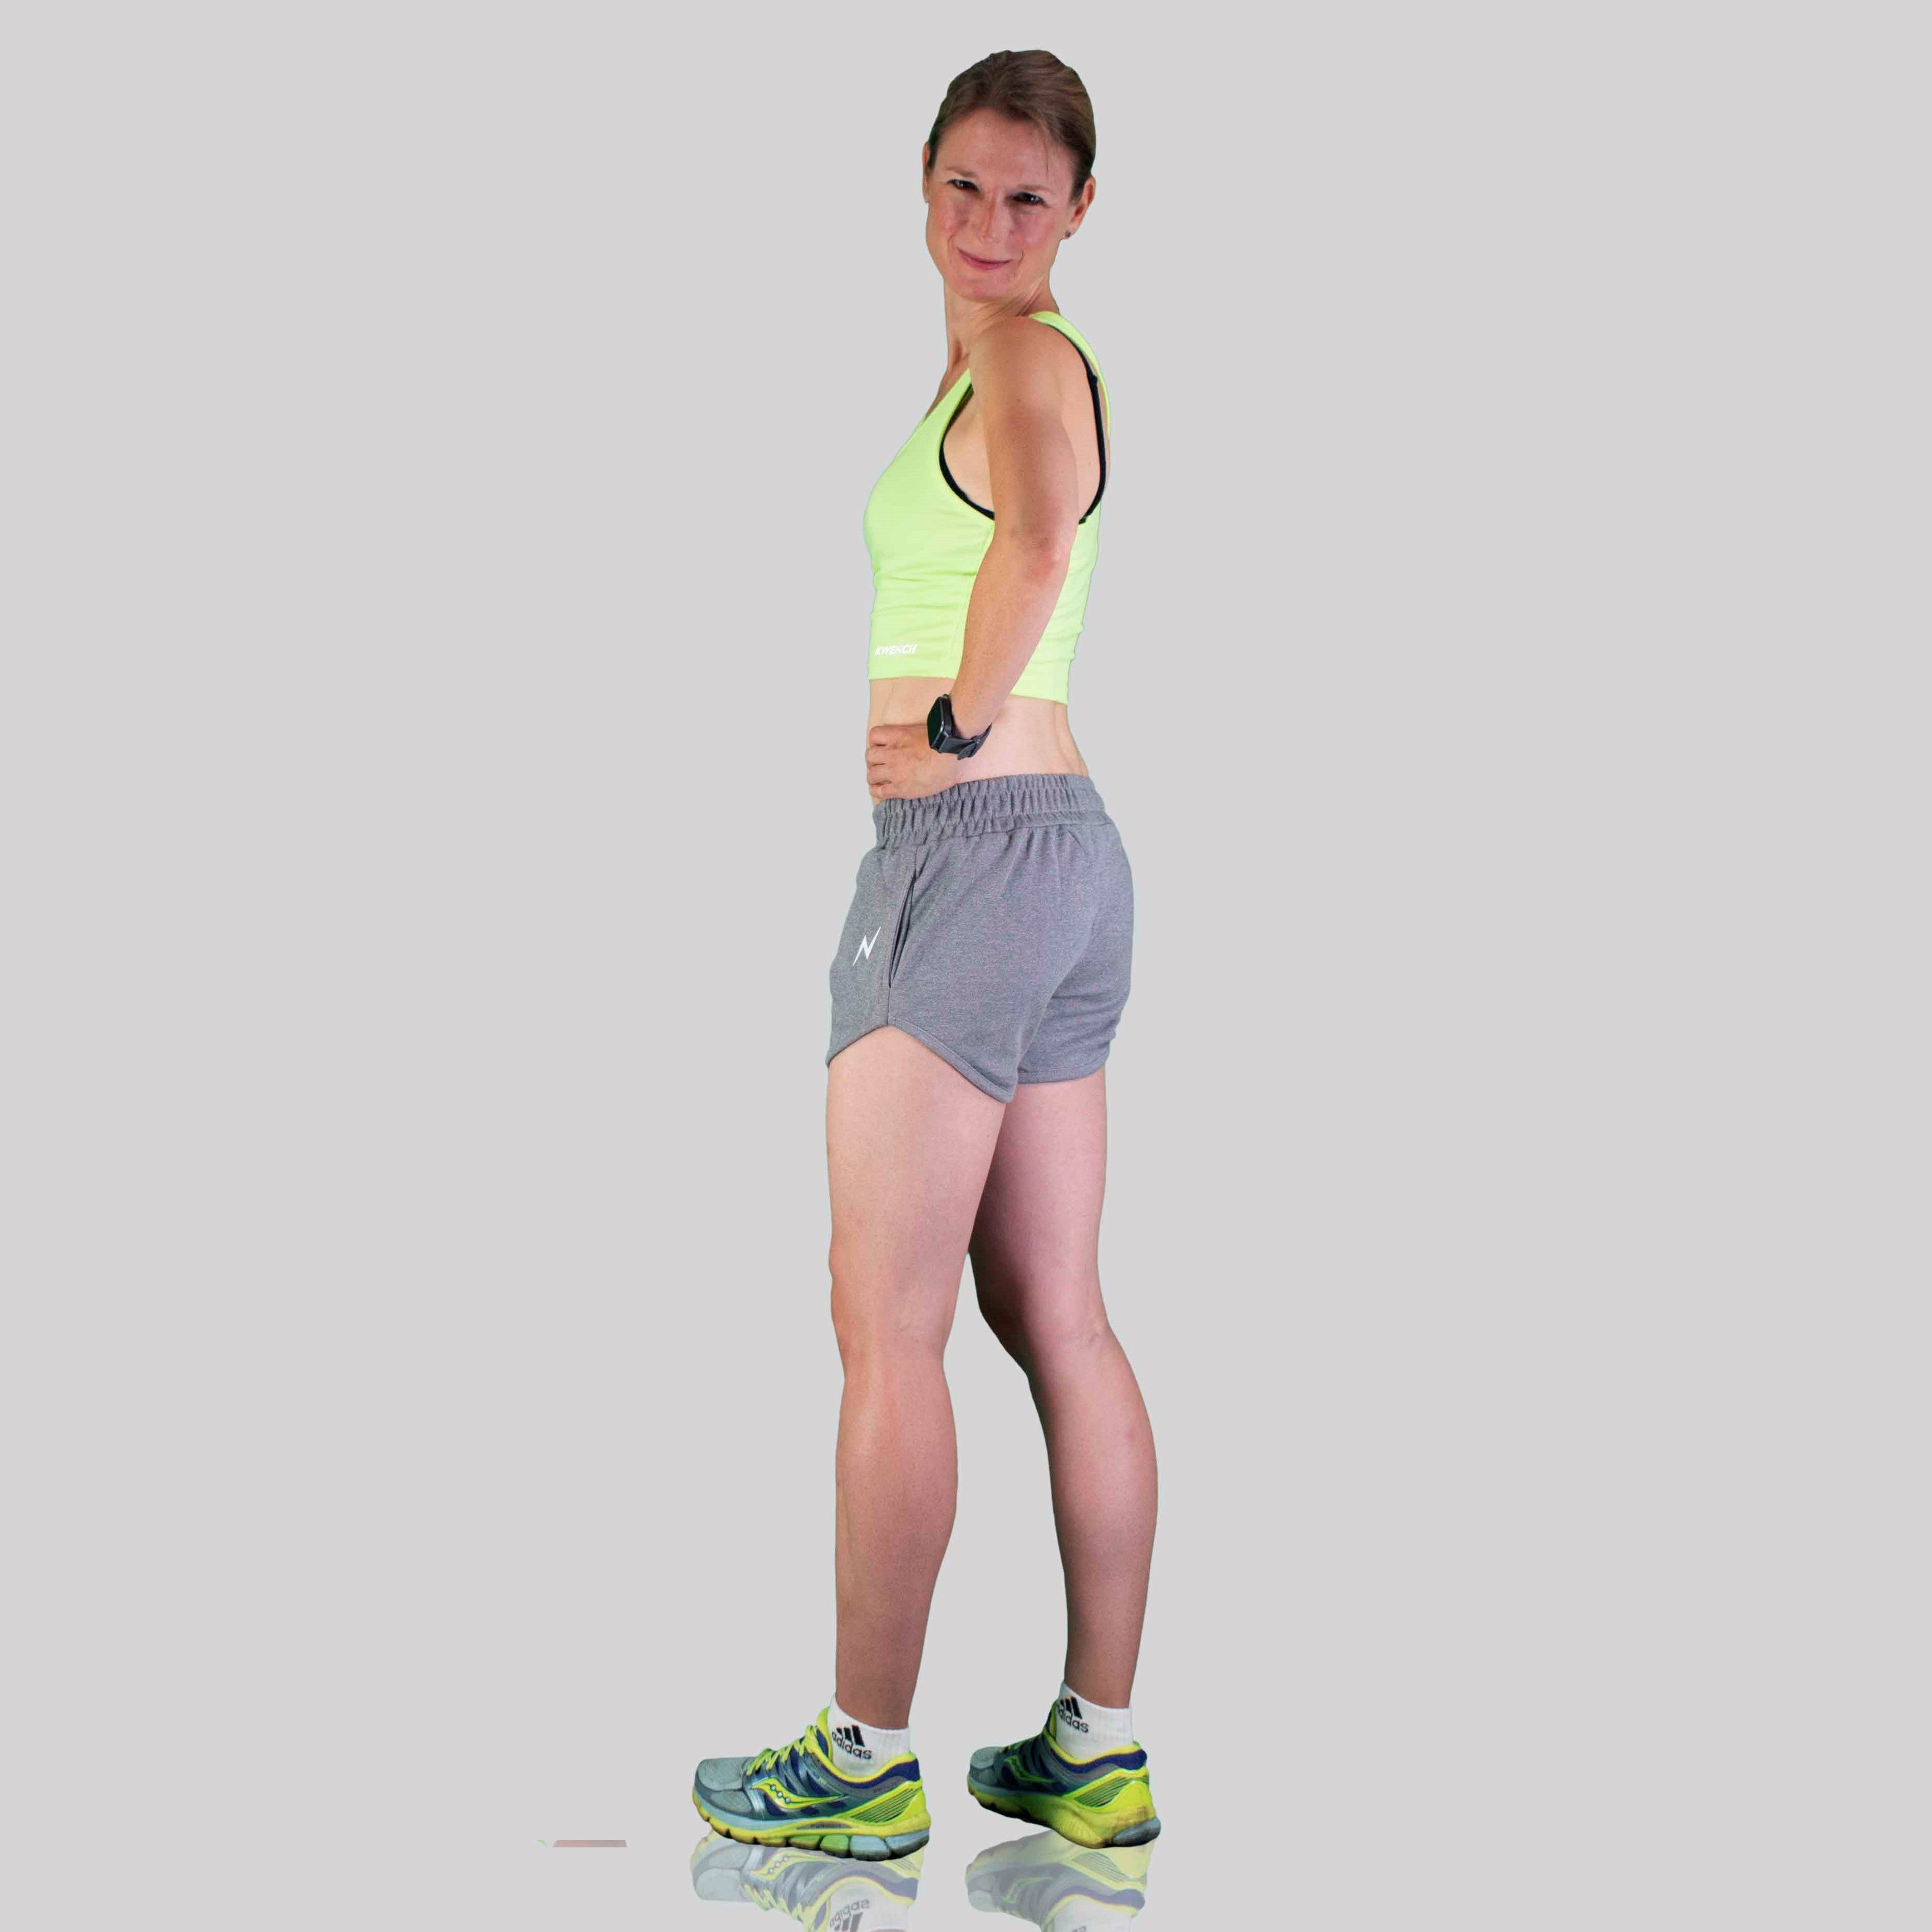 Kwench womens gym running yoga shorts 